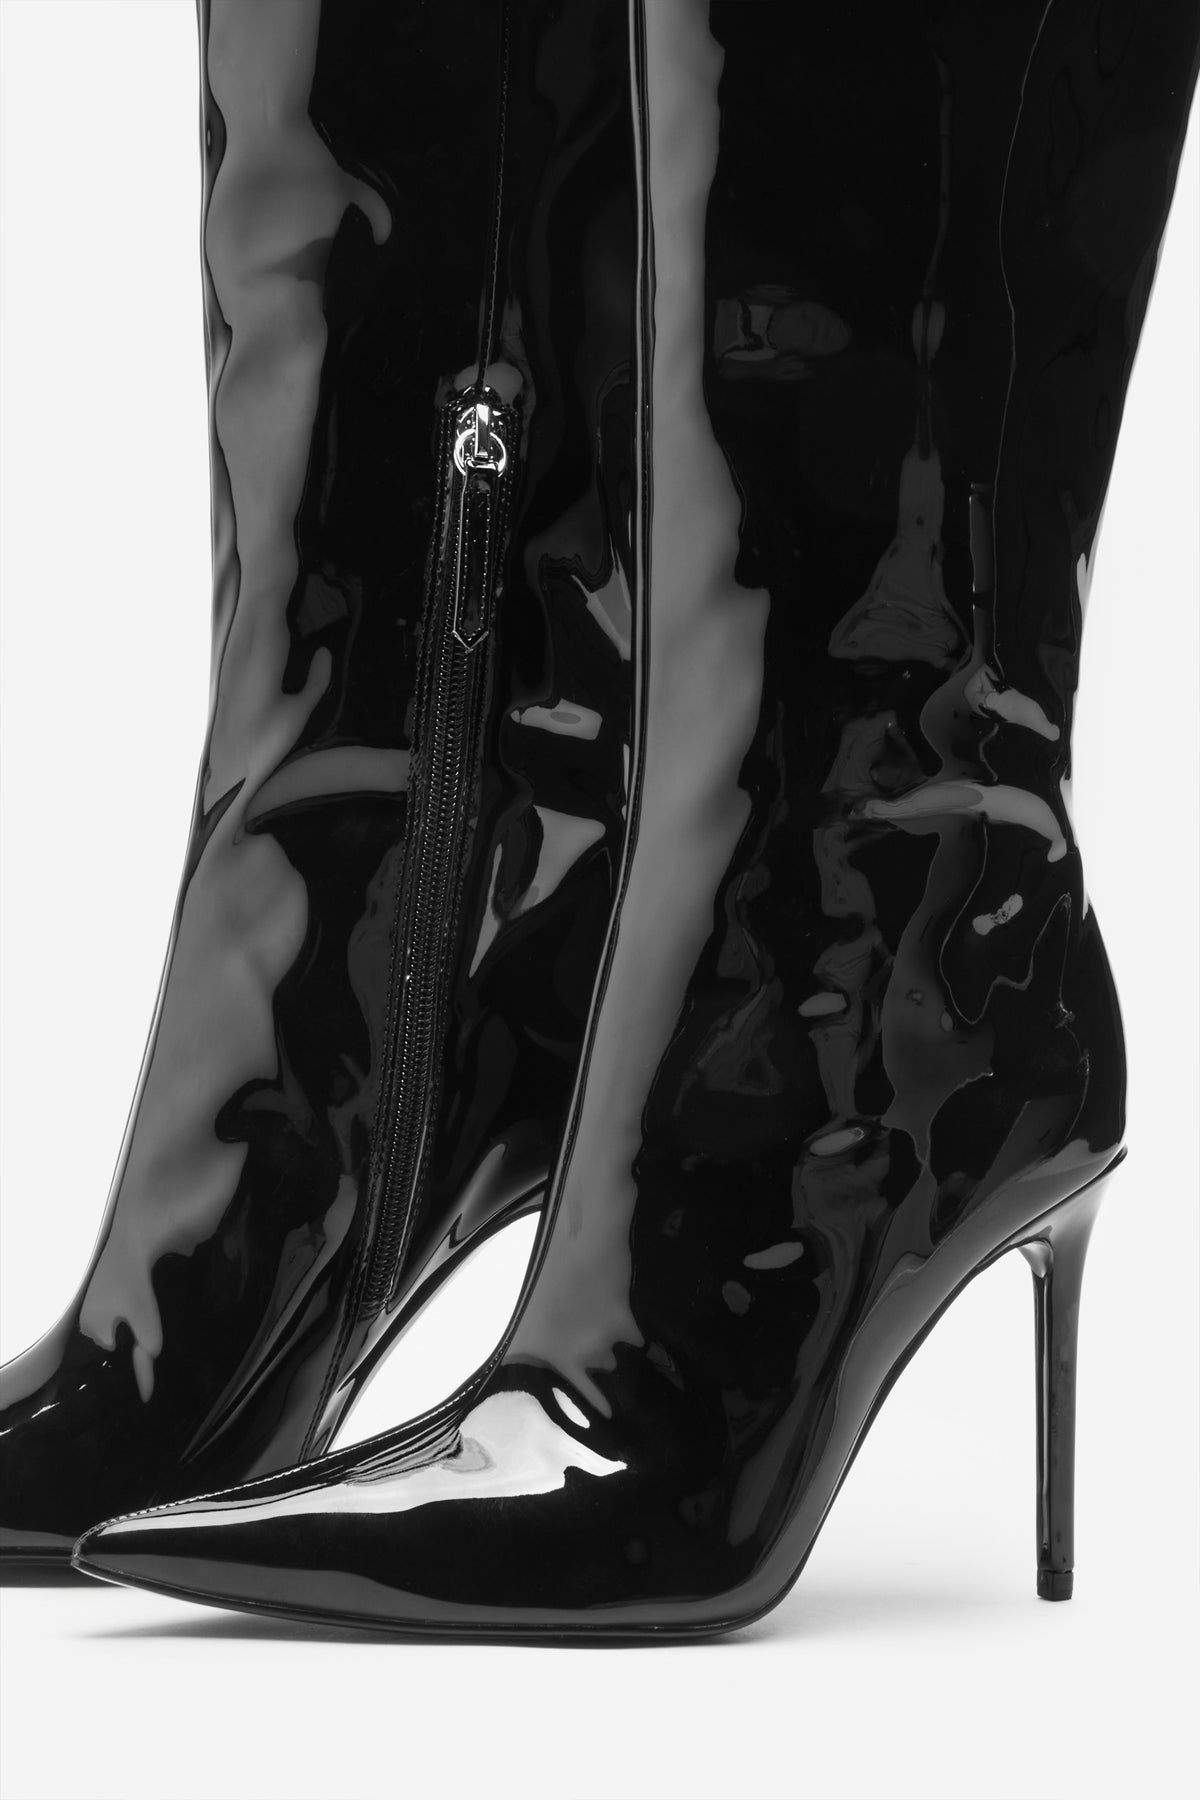 CHIKO Octaviana Pointy Toe Kitten Heels Ankle Boots - Chikoshoes - Medium